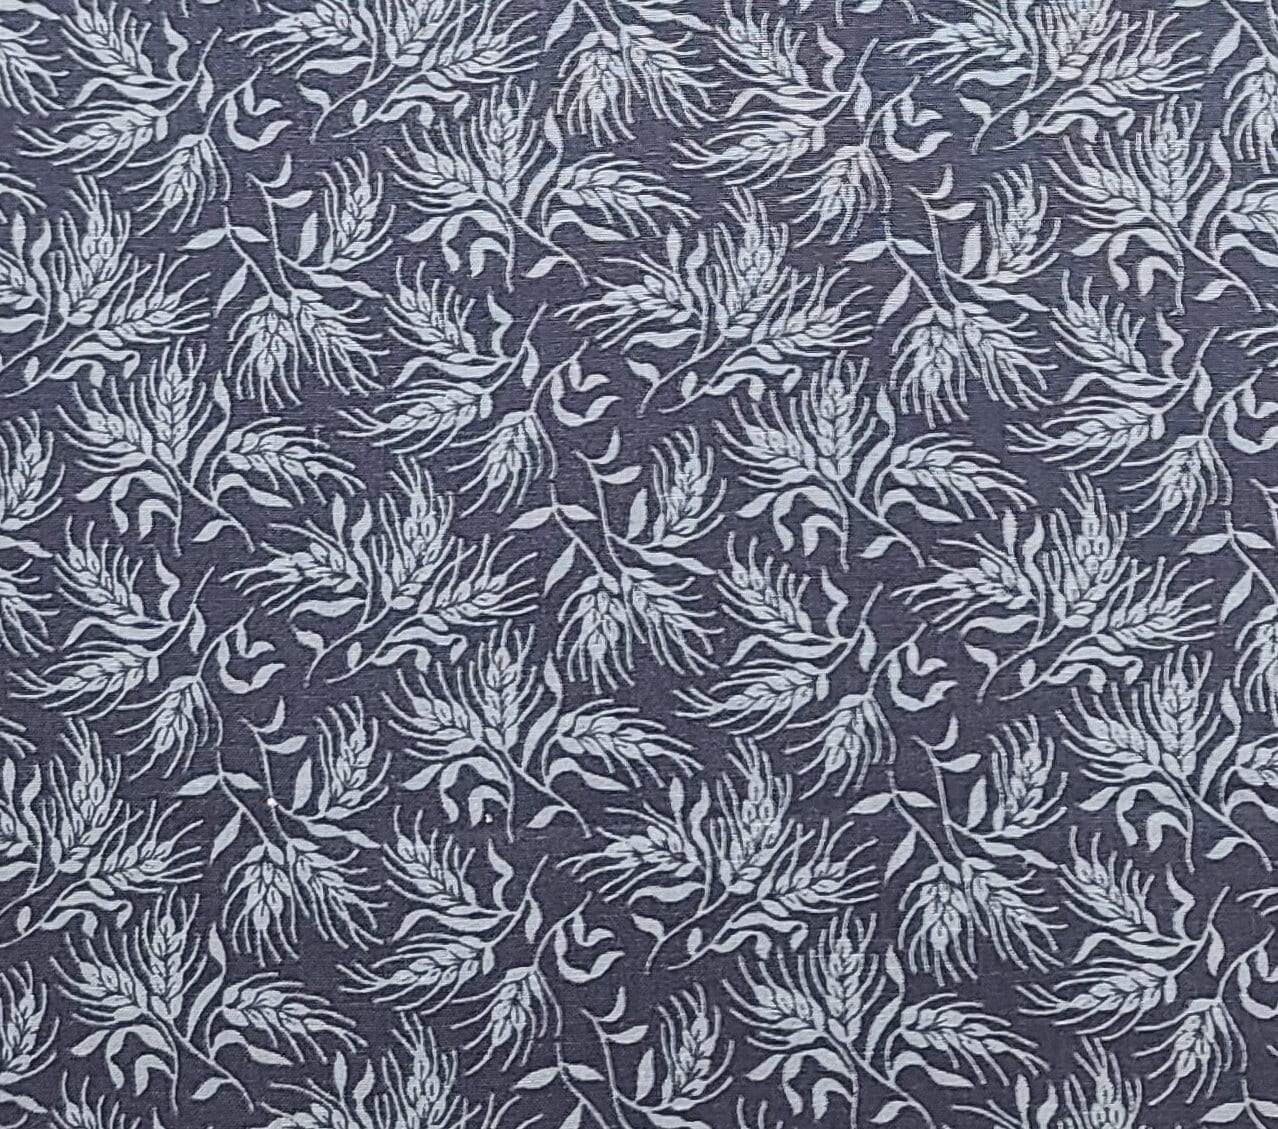 Medium Navy Fabric / Light Blue Wheat, Flower Pattern - Selvage to Selvage Print